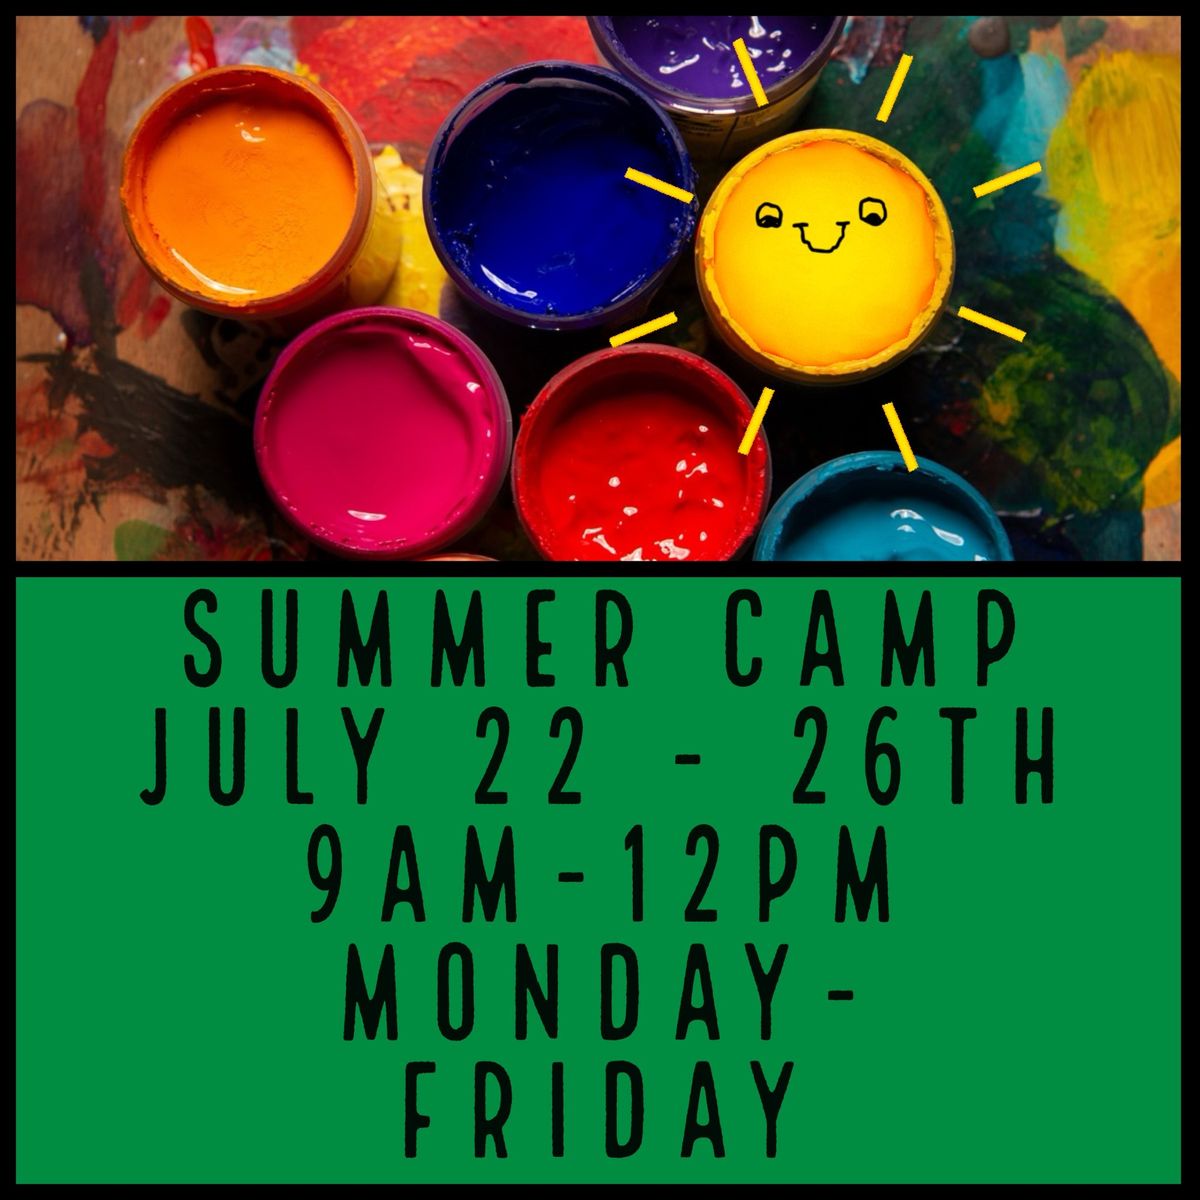 Summer Camp July 22-26, 9am-12pm Monday-Friday @ Enchanted Pottery Studios